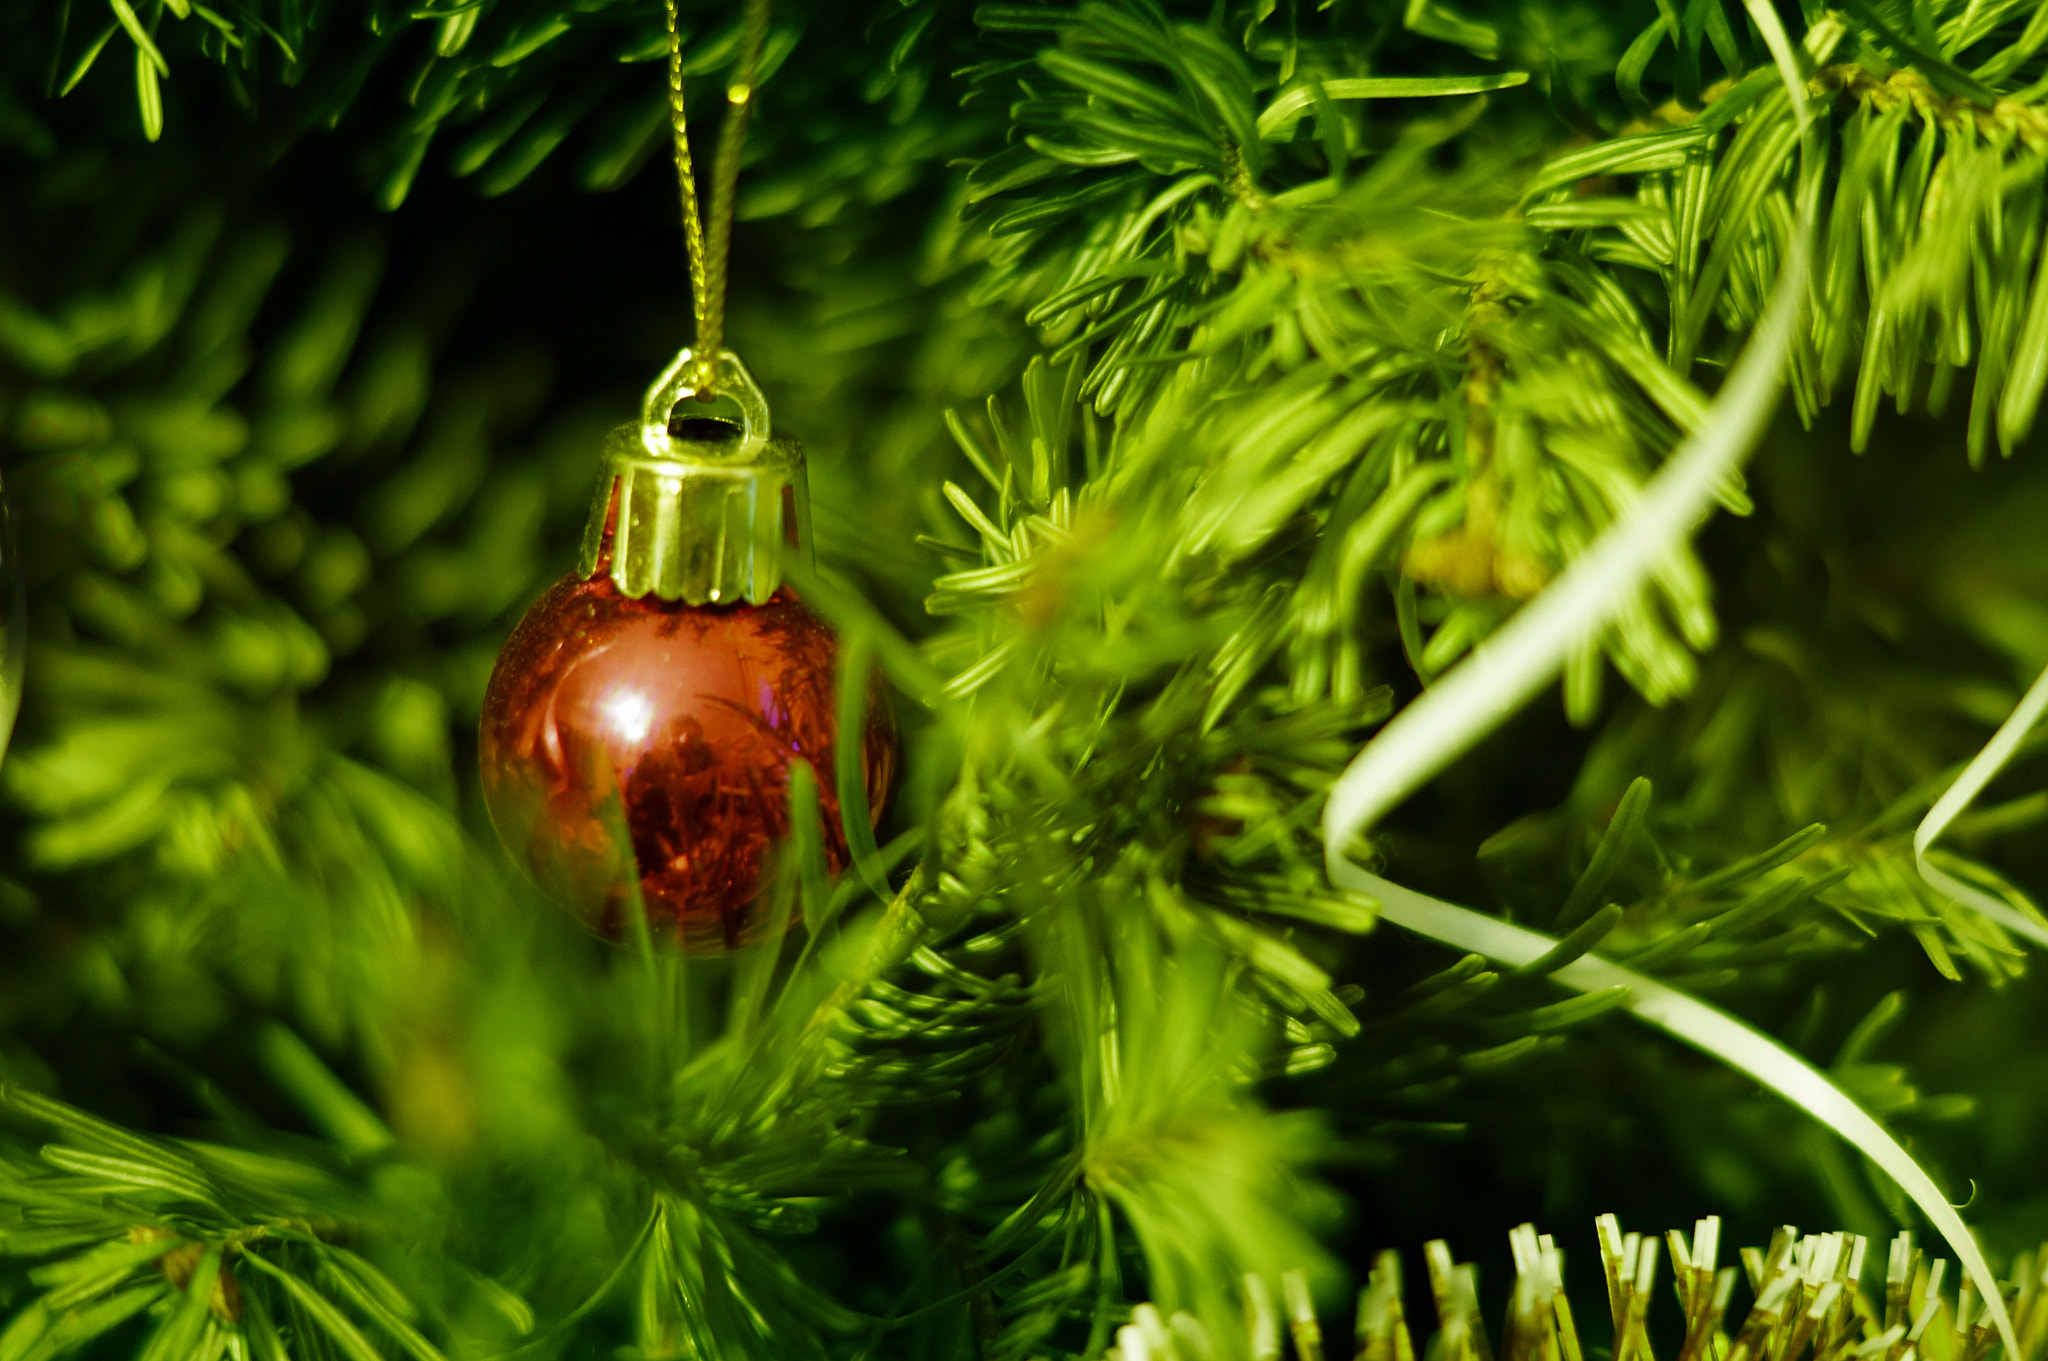 Sony SLT-A57 sample photo. A christmas tree decoration photography